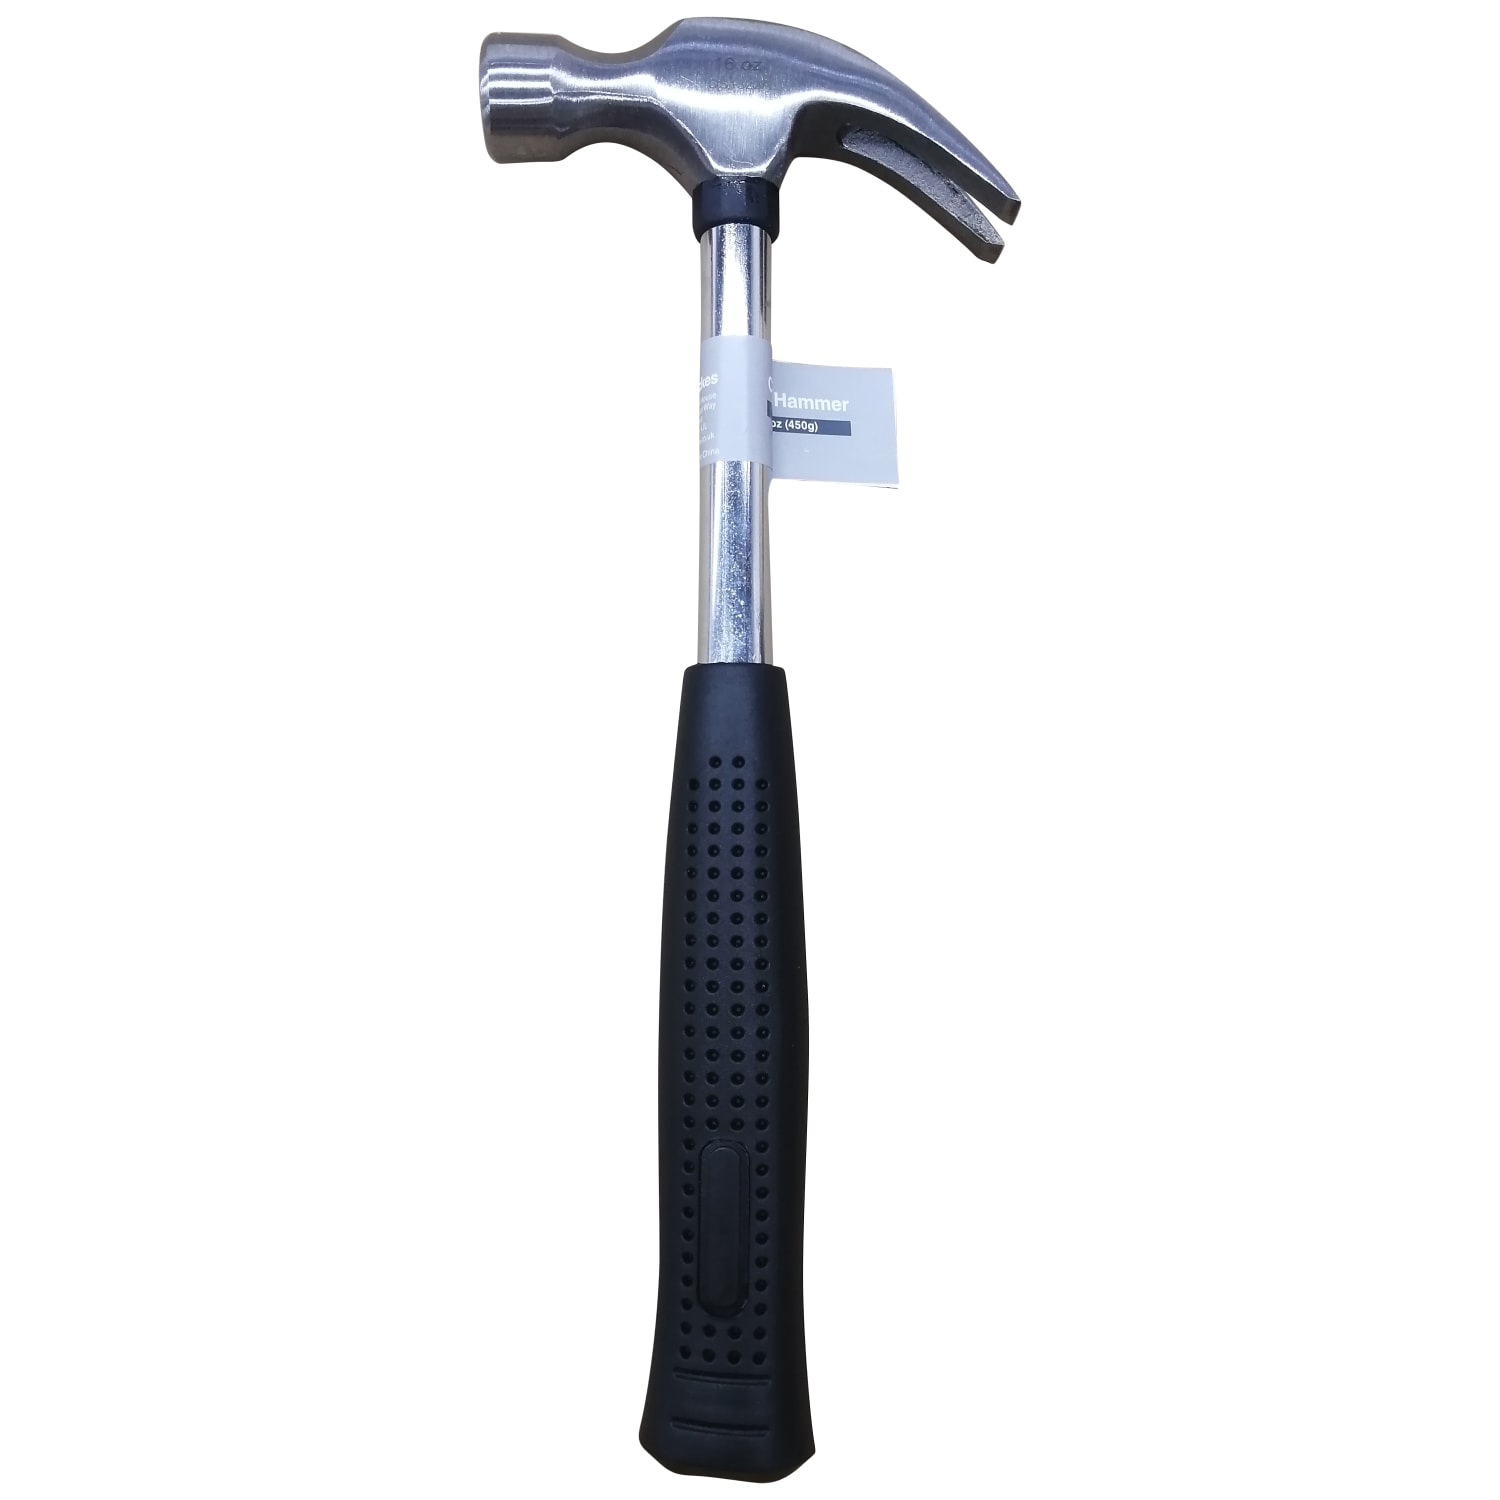 Wickes General Purpose Claw Hammer - 16oz